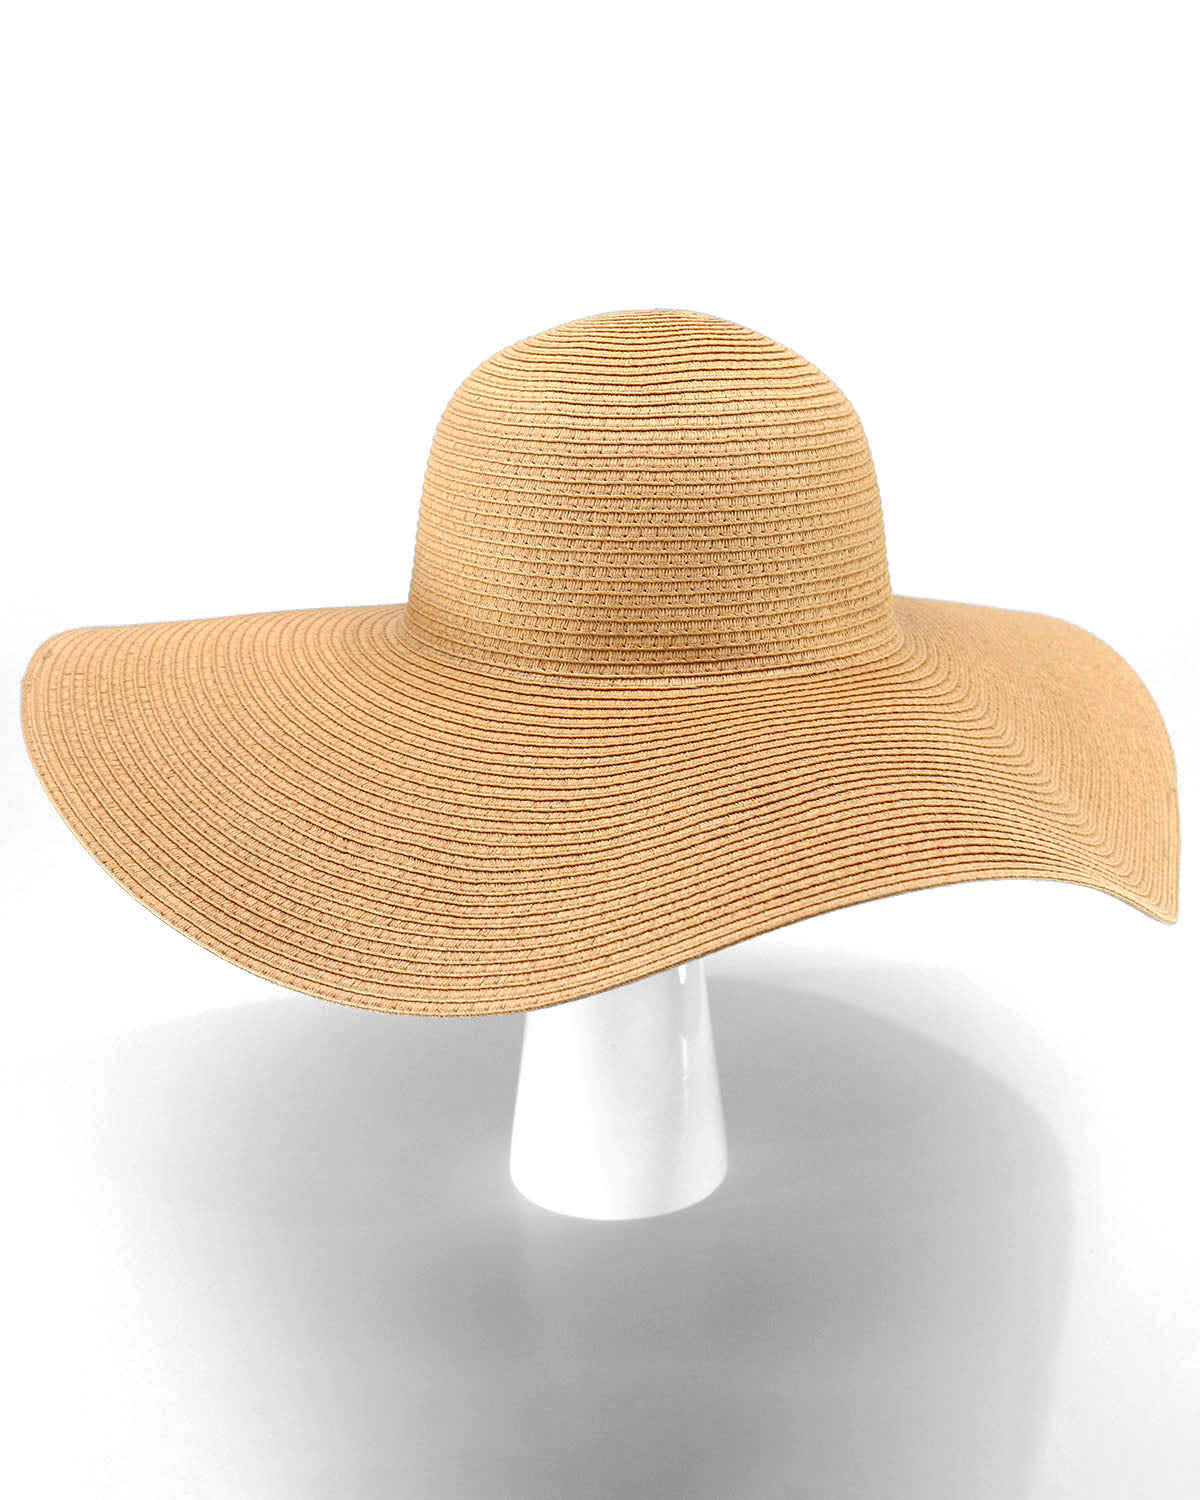 Khaki Beach Straw Hat - FINAL SALE